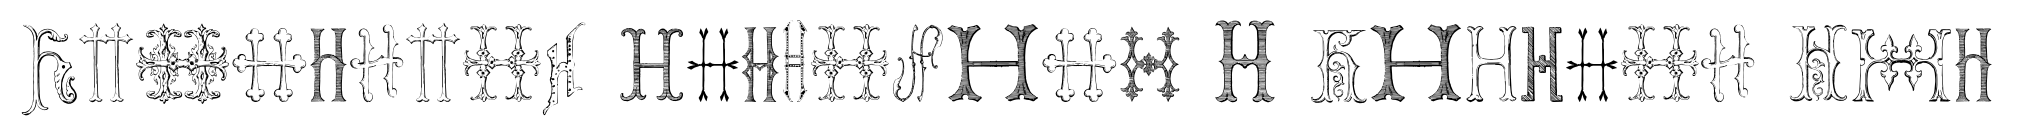 Victorian Alphabets H Regular Two image